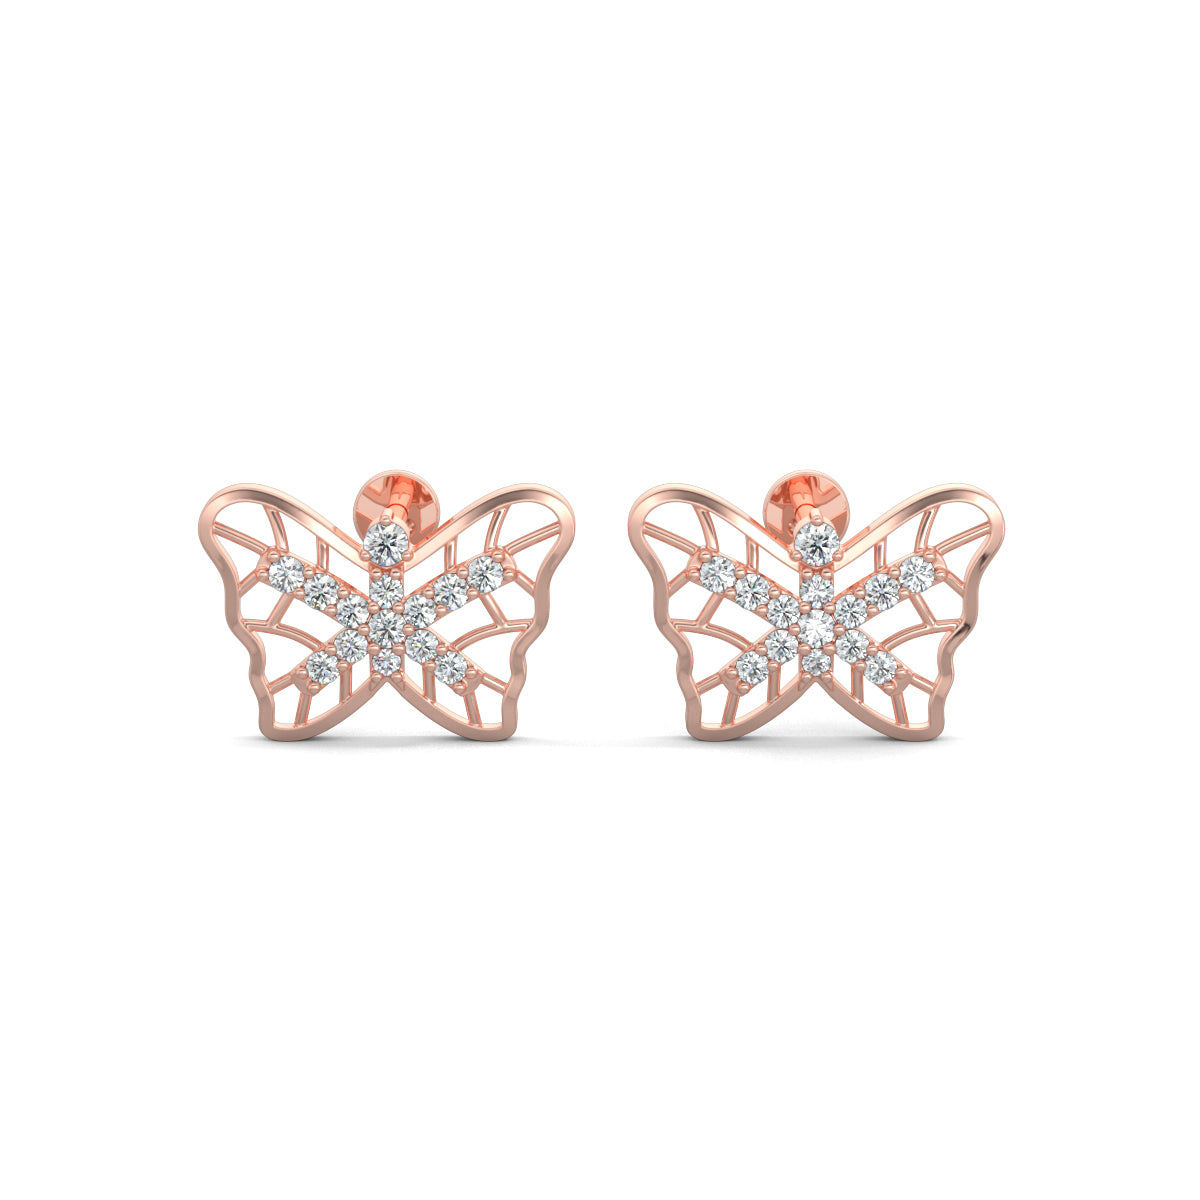 Rose Gold, Diamond Earrings, Natural diamonds stud earrings, Lab-grown diamond stud earrings, Wing shape earrings, Diamond embellished wing earrings, Elegant diamond studs